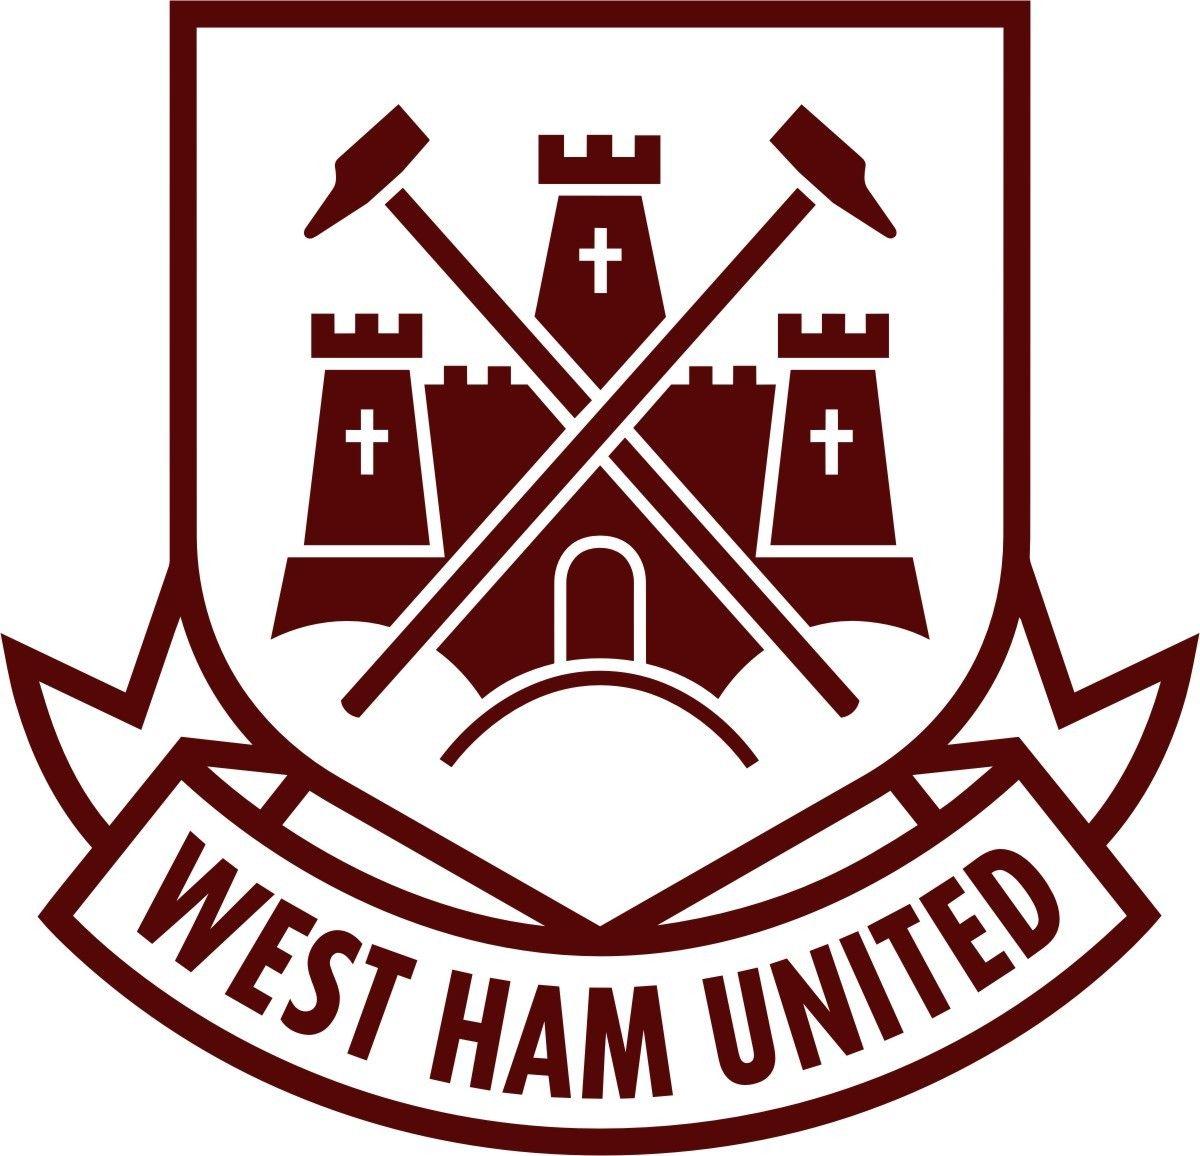 West Ham United Logo - MATCH PREVIEW: West Ham United, St James' Park, 24/Aug/13, KO: 3pm ...